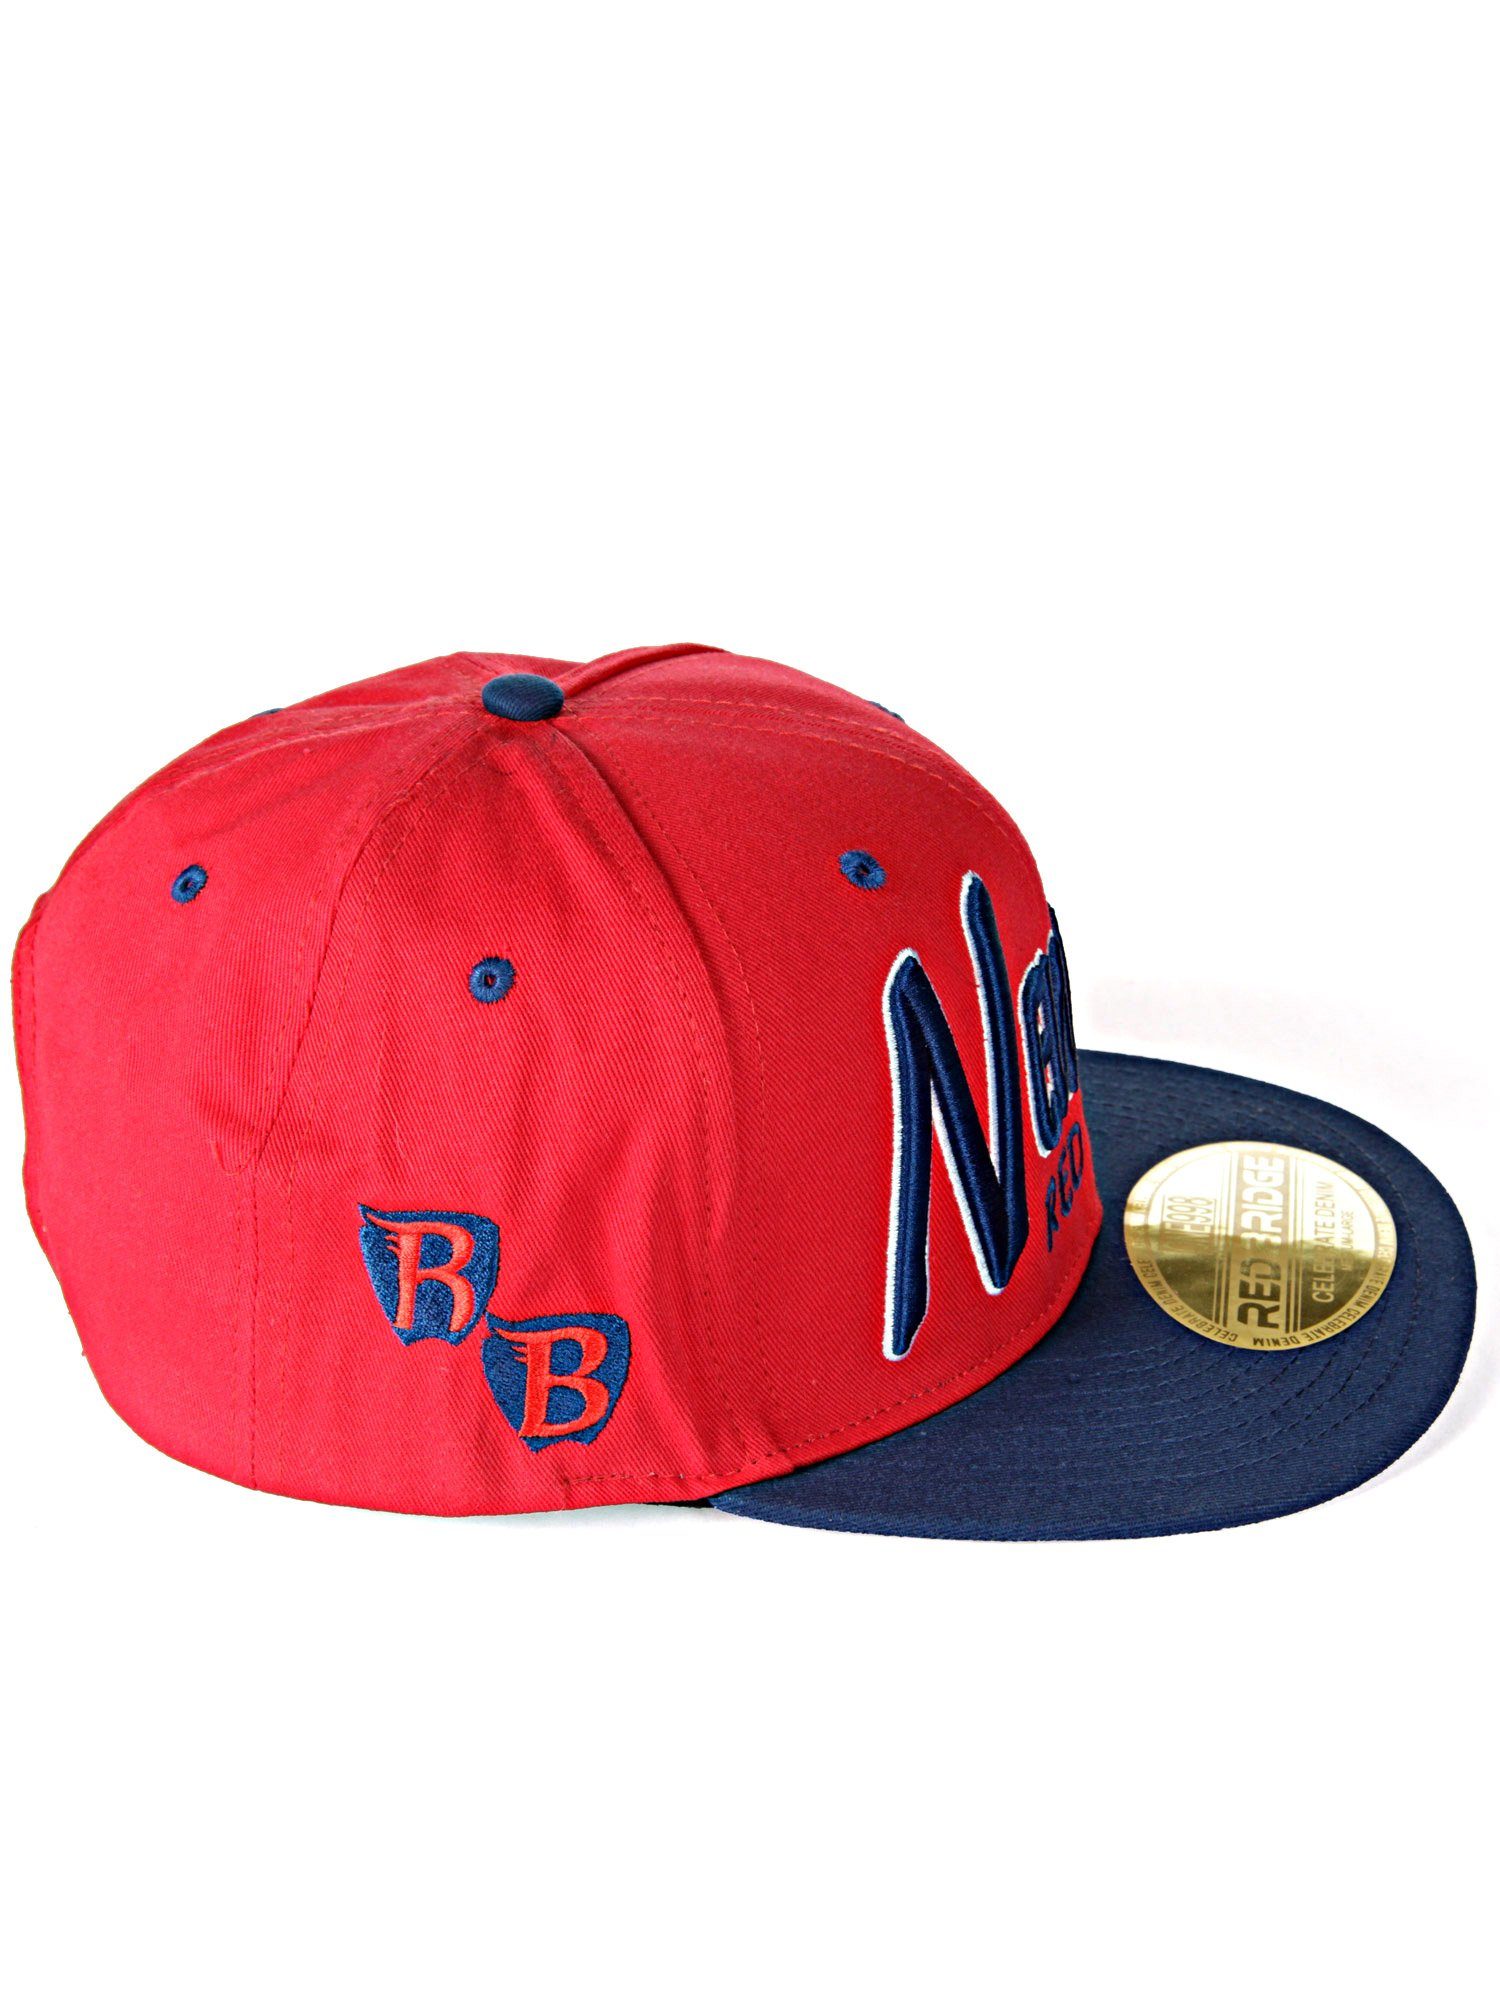 RedBridge Baseball Cap dunkelblau-rot Schirm mit kontrastfarbigem Bootle